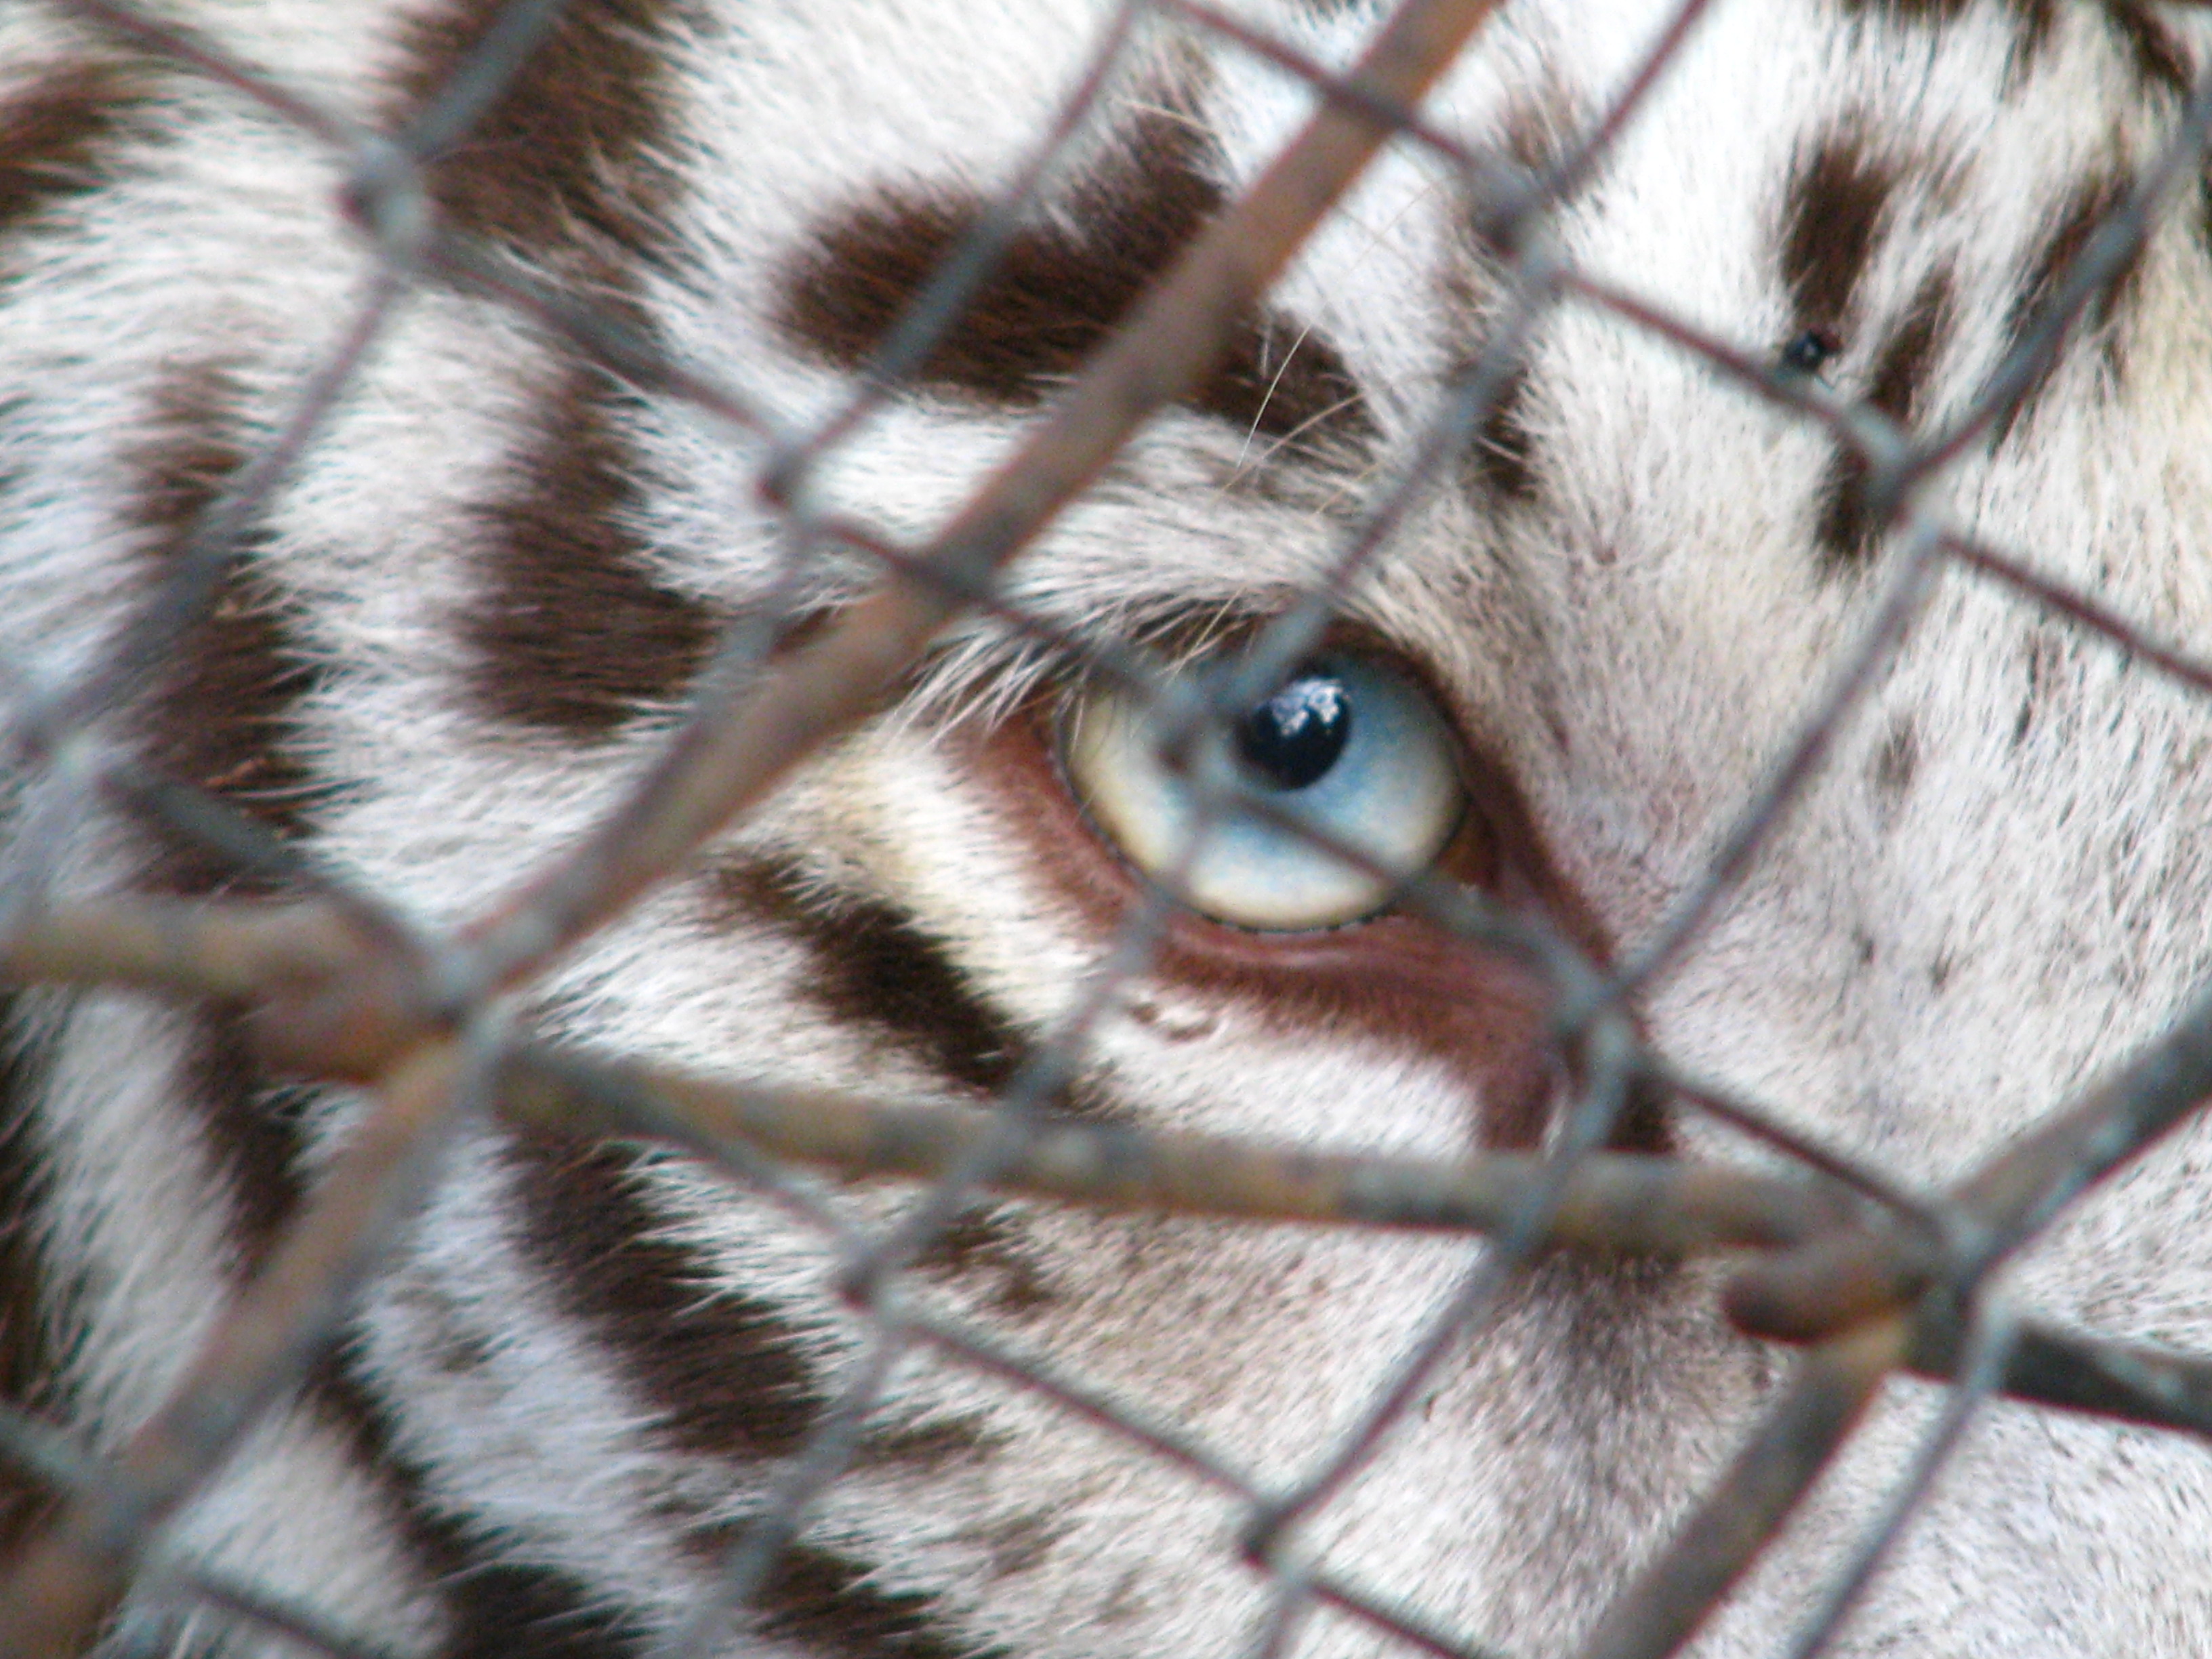 A Caged Tiger Free to Roam? – Kamali Academy